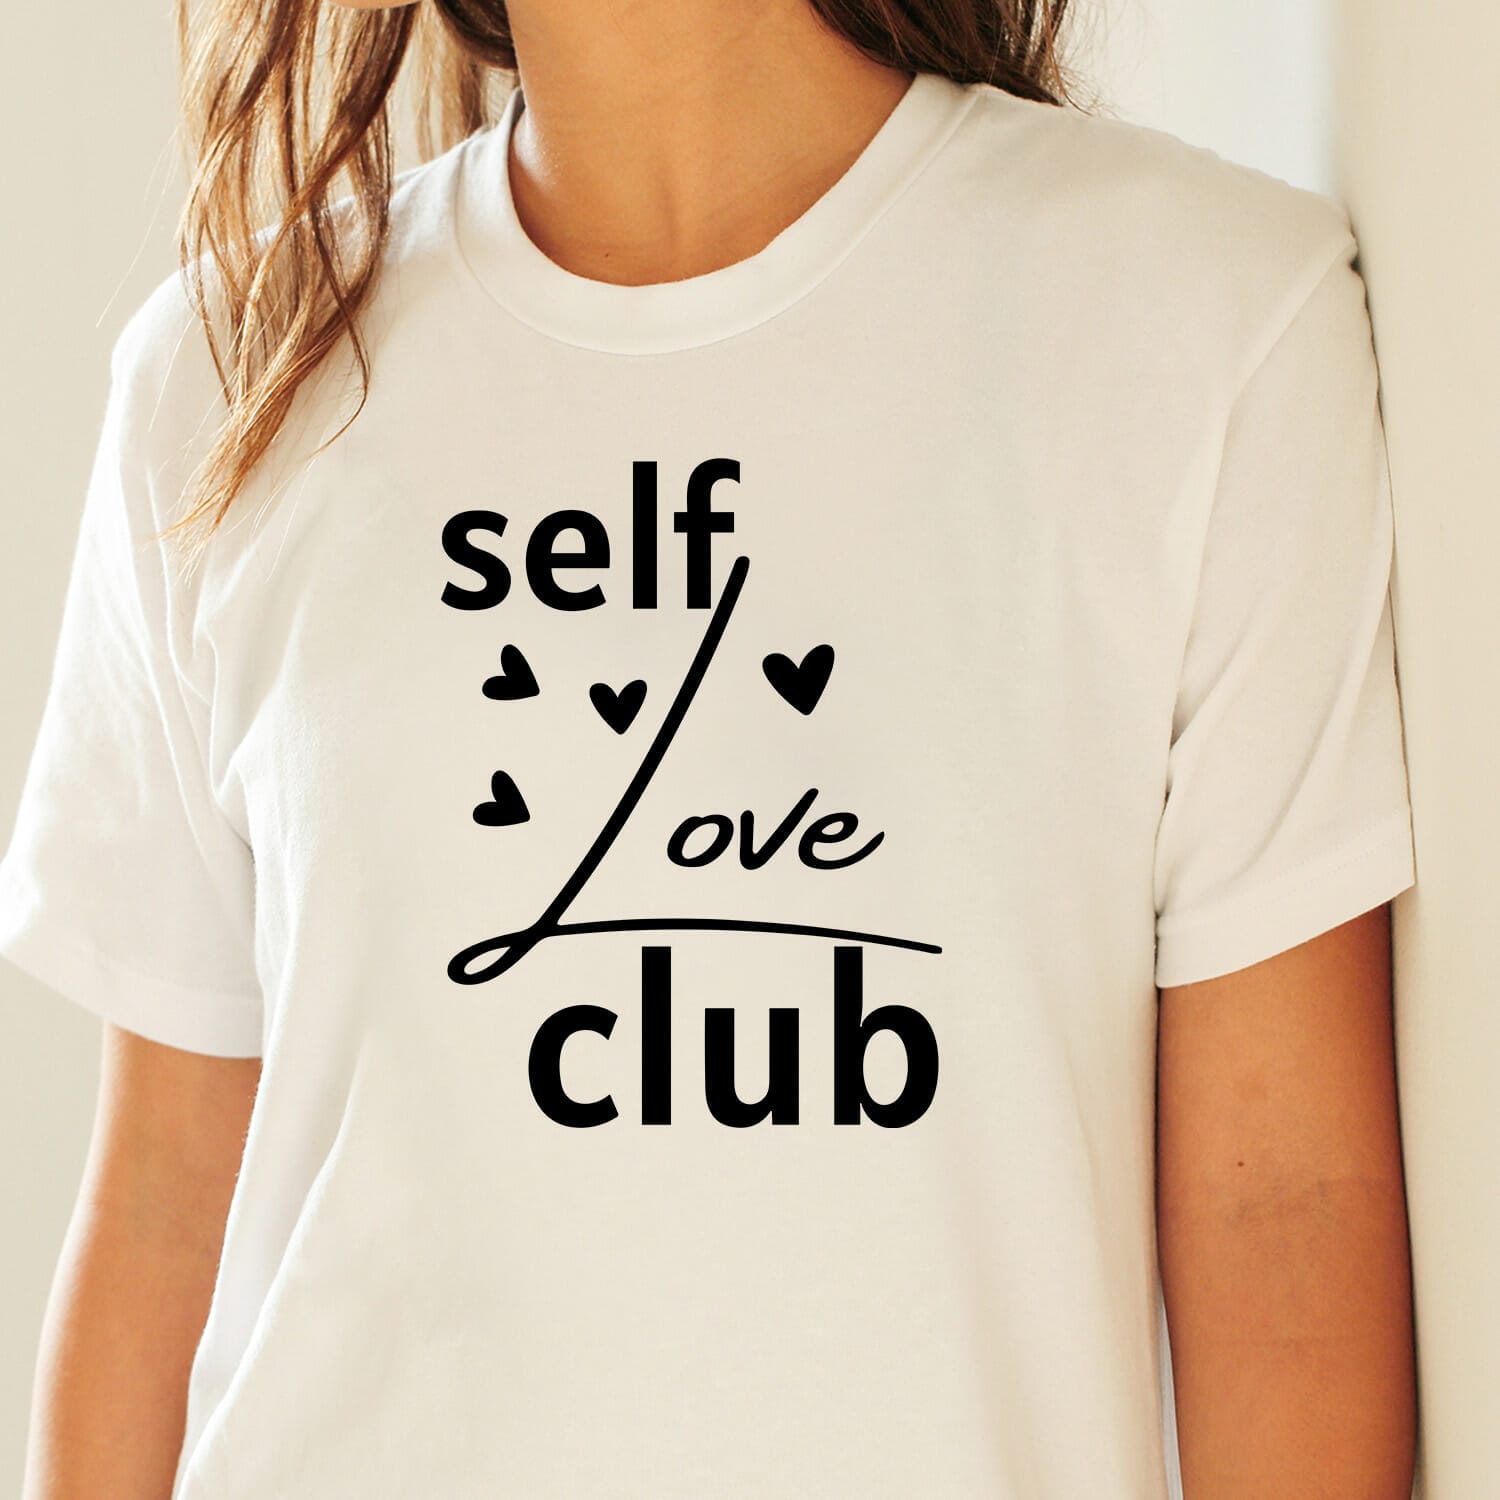 Self love club feature img